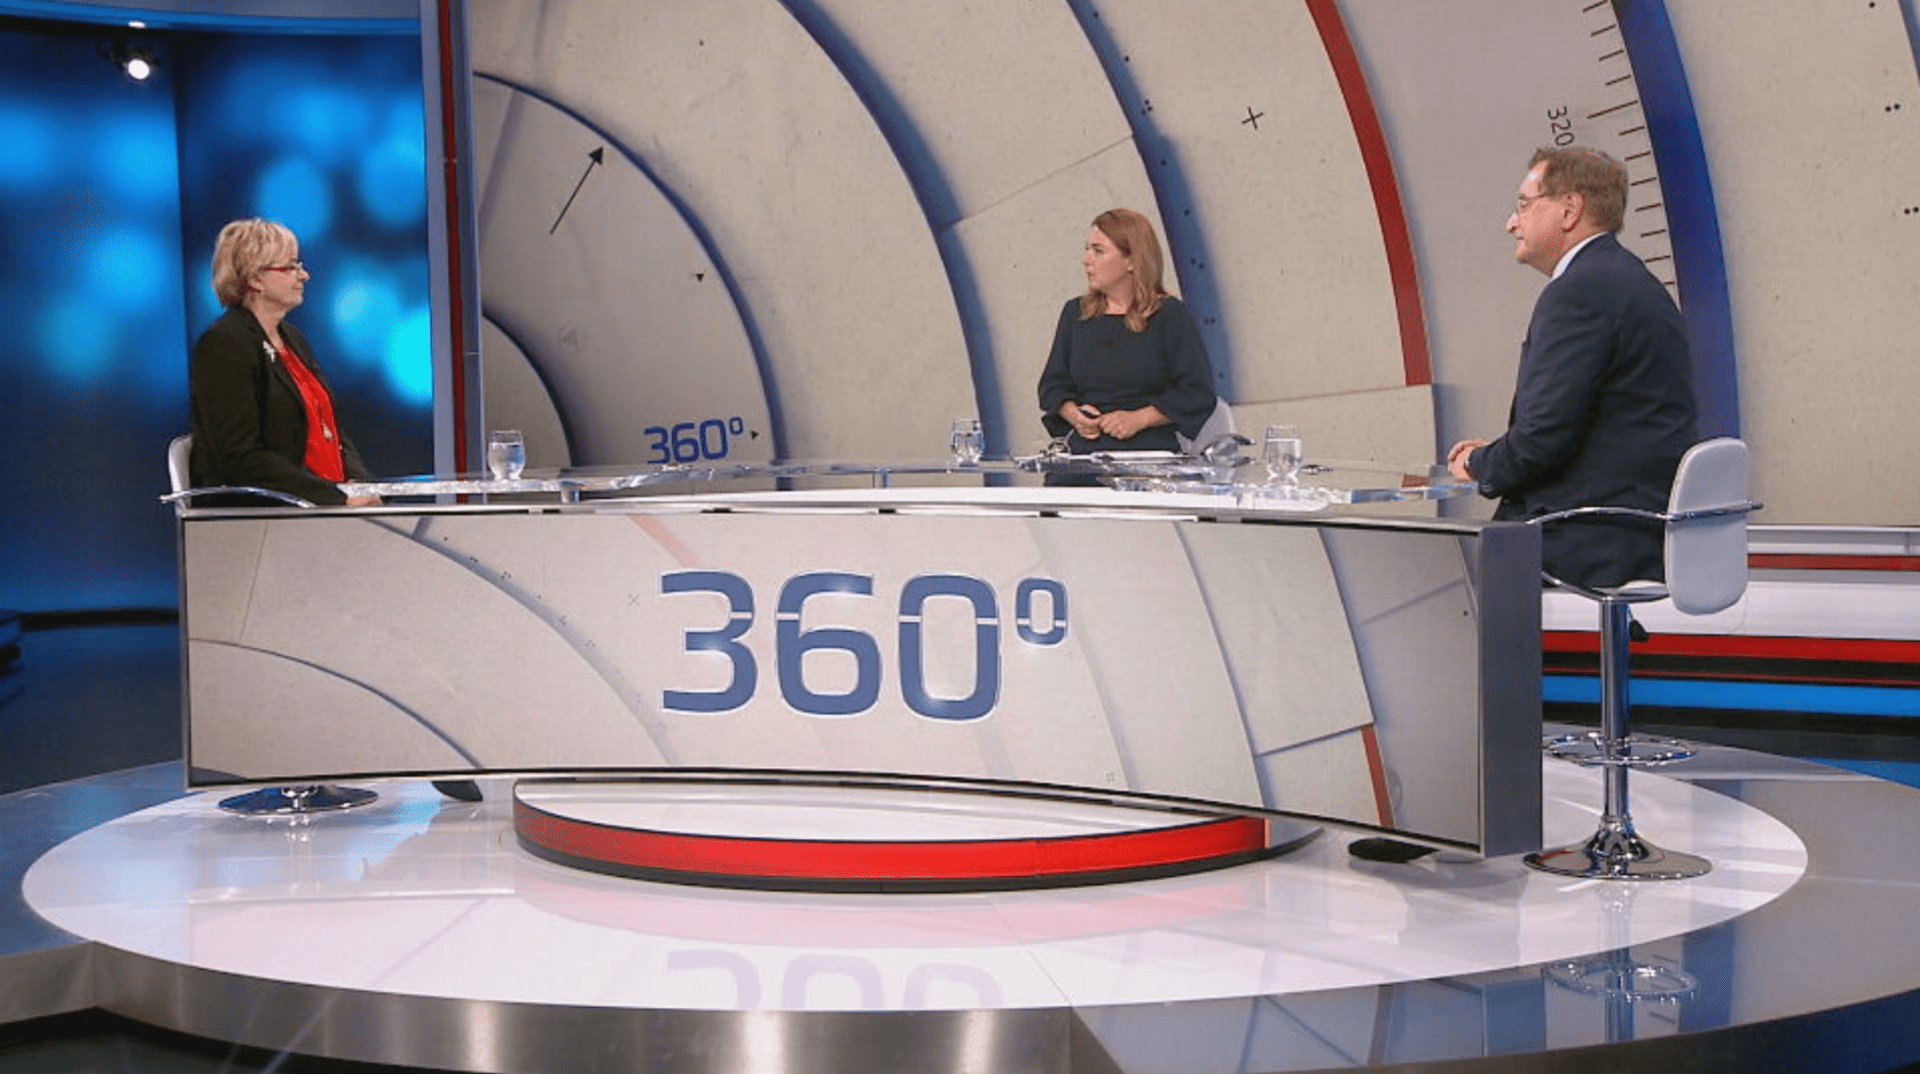 Novinářka Pavlína Wolfová moderuje pořad 360 na CNN Prima NEWS.